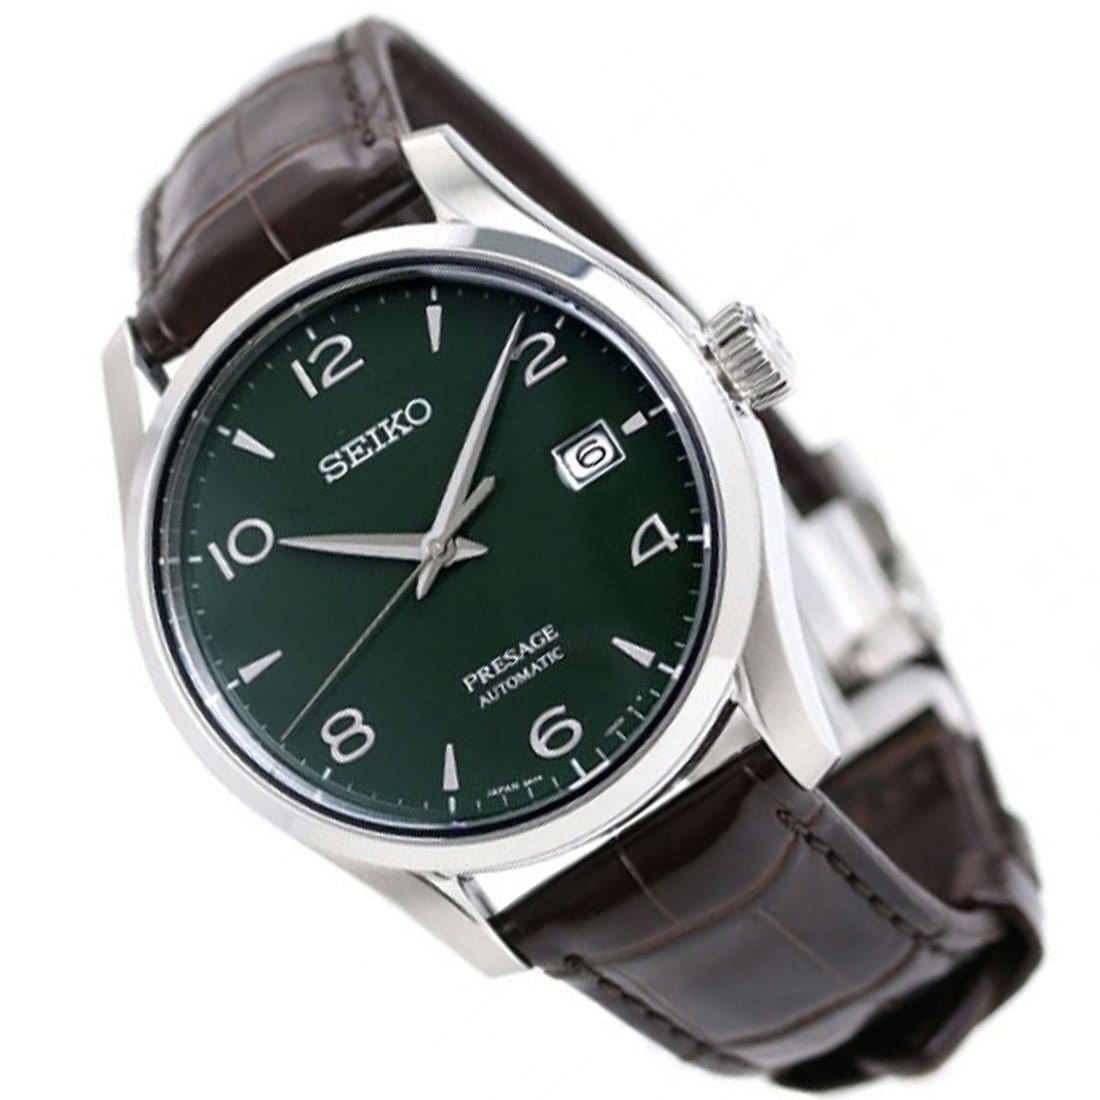 SARX063 Seiko Presage JDM Green Enamel Limited Edition Watch (PRE-ORDER)